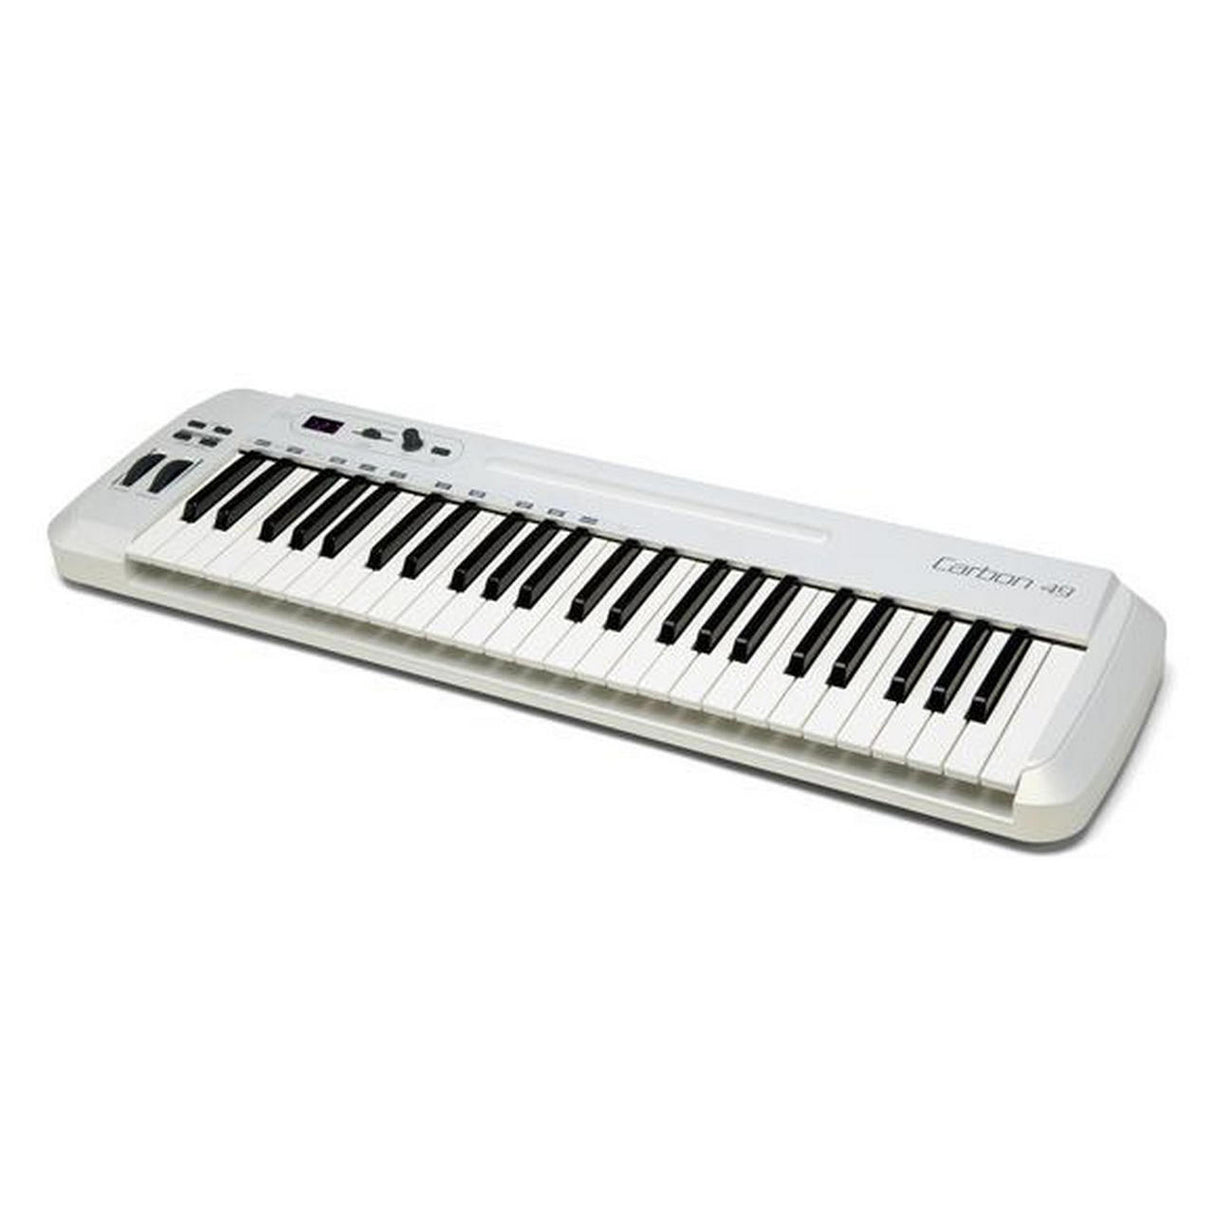 Samson Carbon 49 | 49 Keyboard USB MIDI Controller